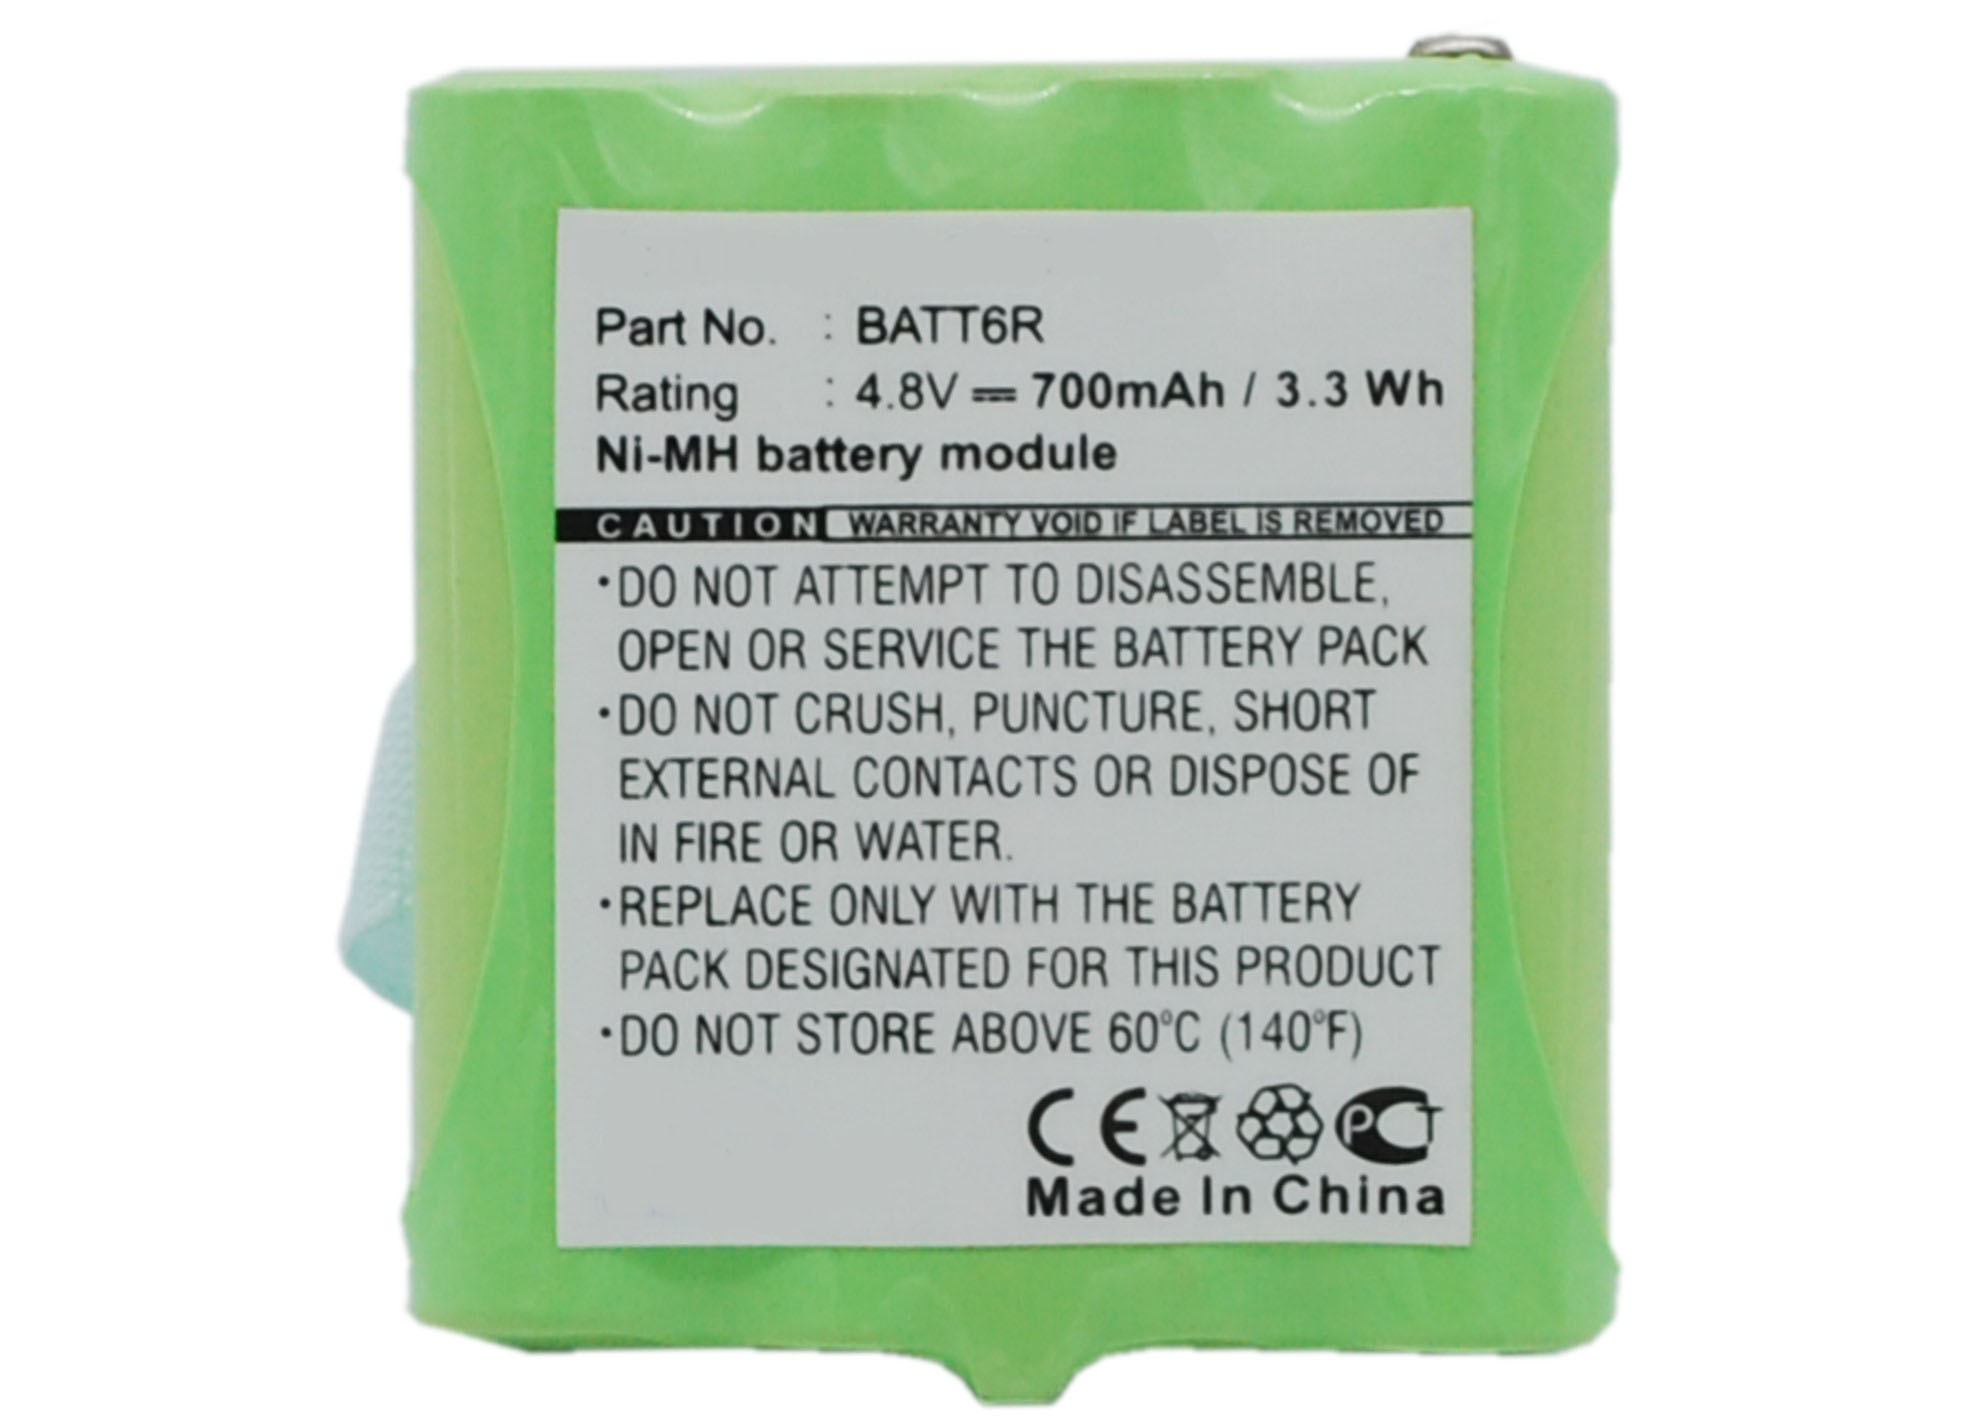 Batteries for Uniden2-Way Radio